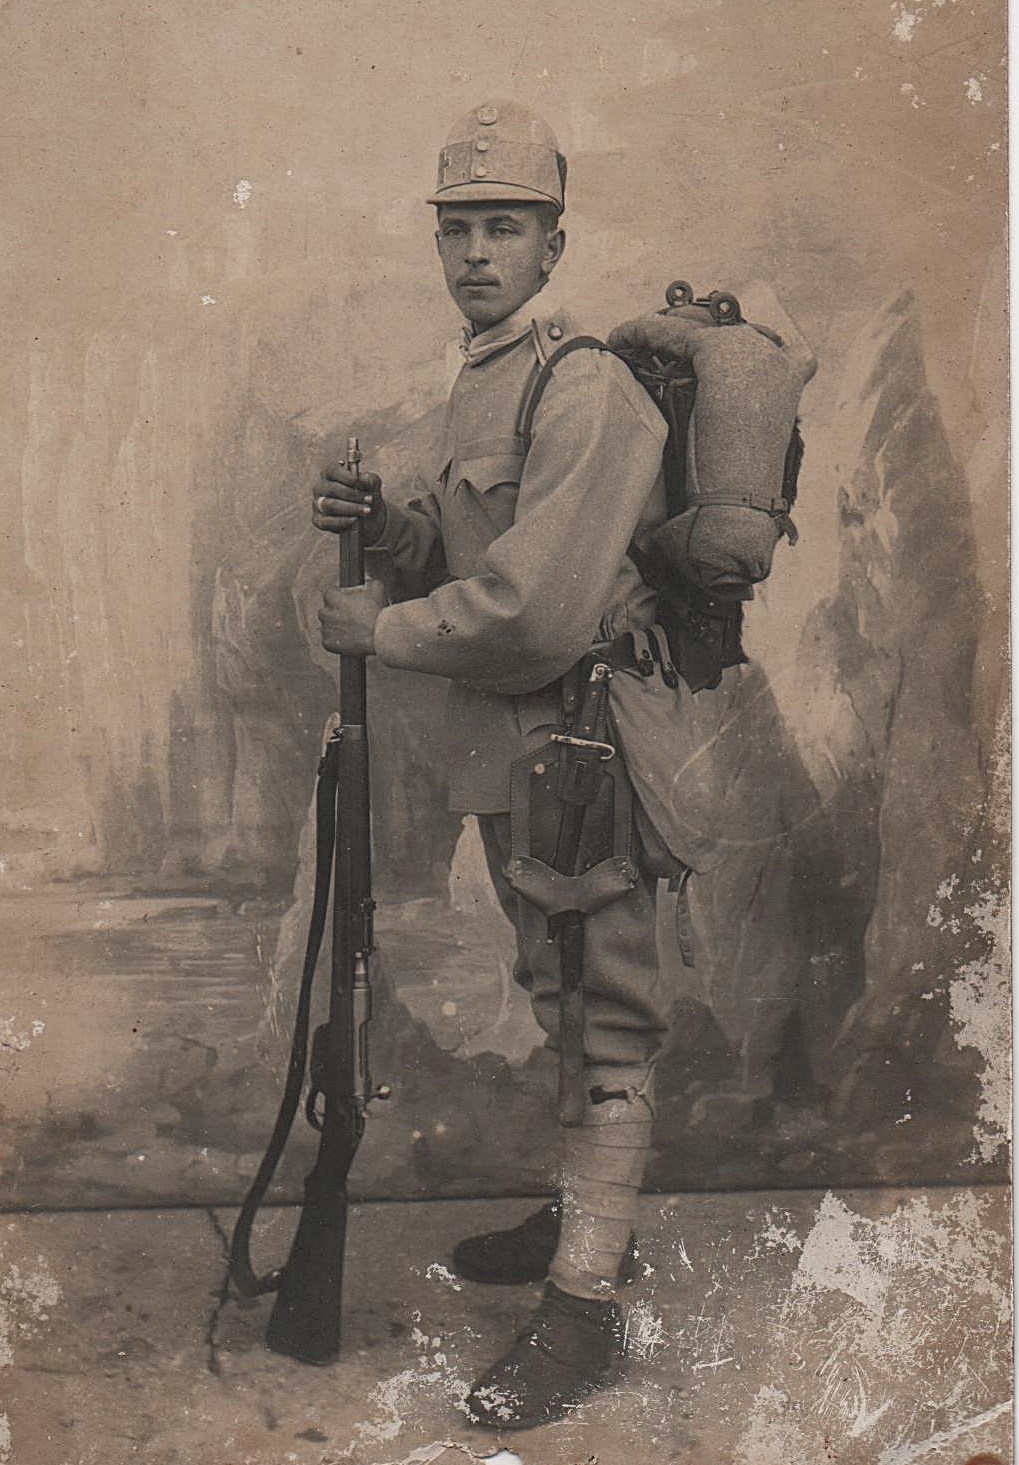 Soldat aus dem Ersten Weltkrieg in voller Montur